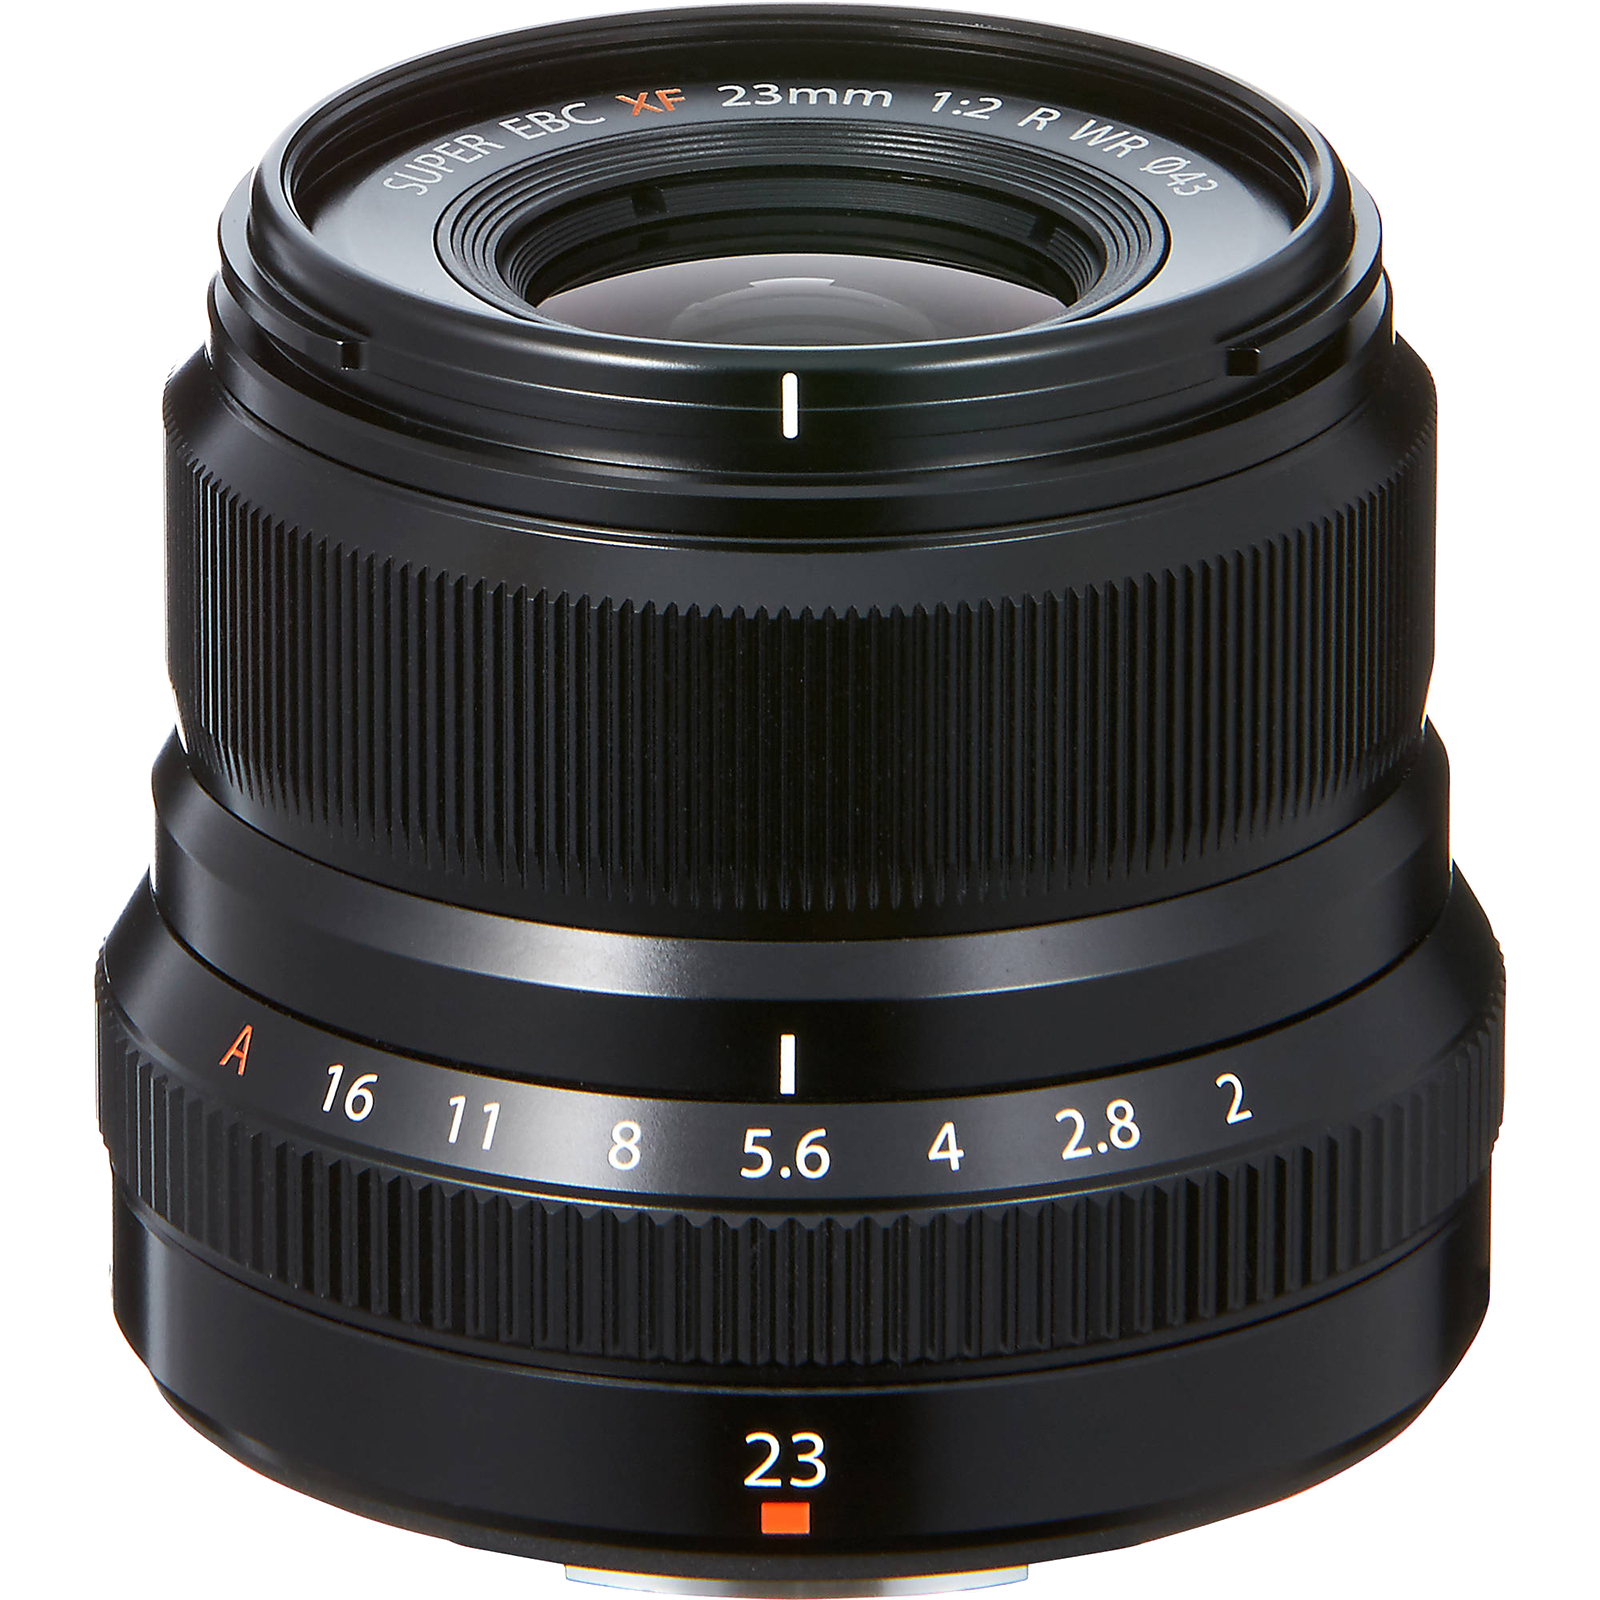 Fujifilm XF23mm F2 R WR Lens - image 1 of 4